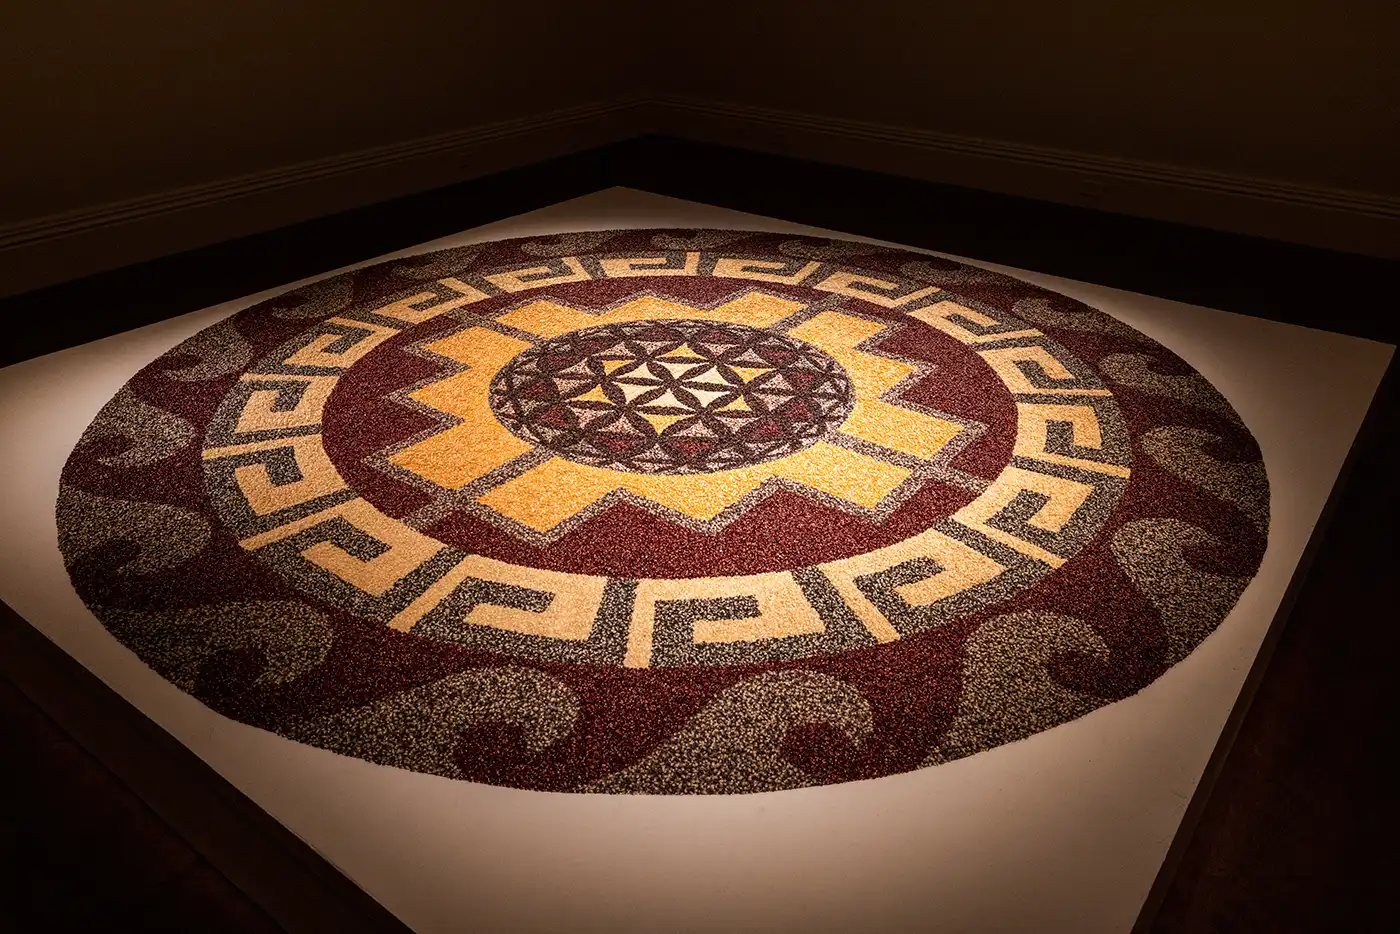 Large, circular mandala design on the floor made of individual corn kernels. Photo courtesy of UVU Museum of Art